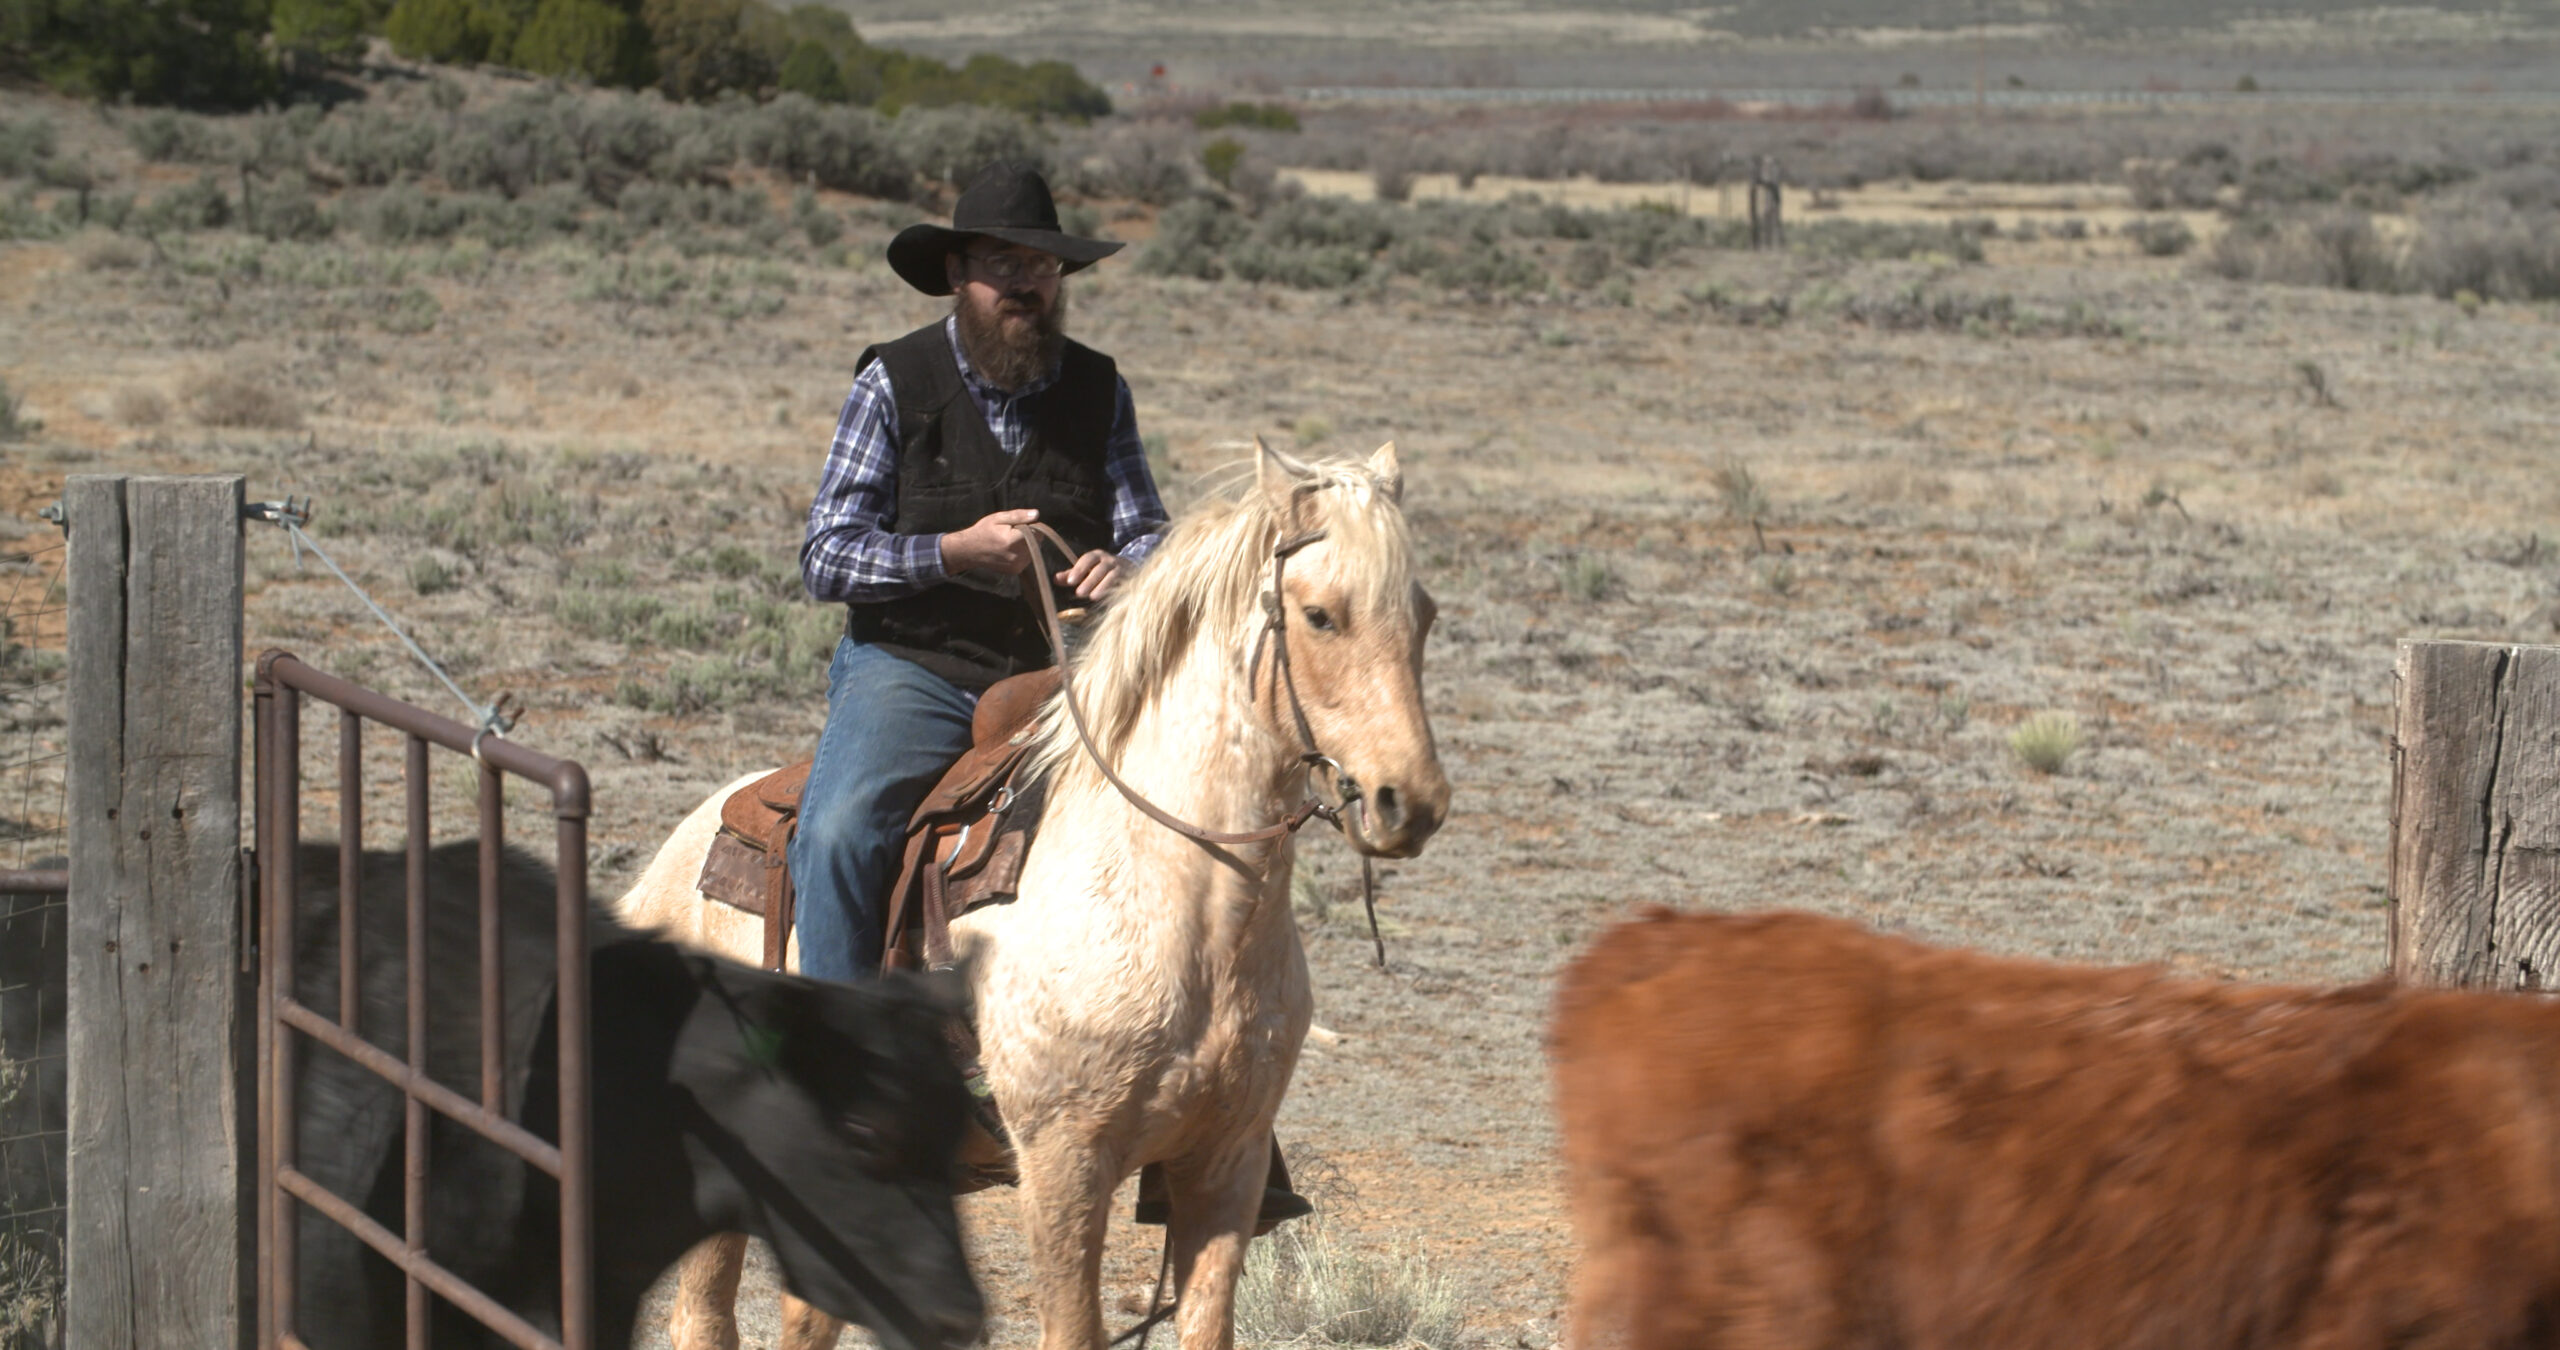 A man sitting on horseback near cattle.